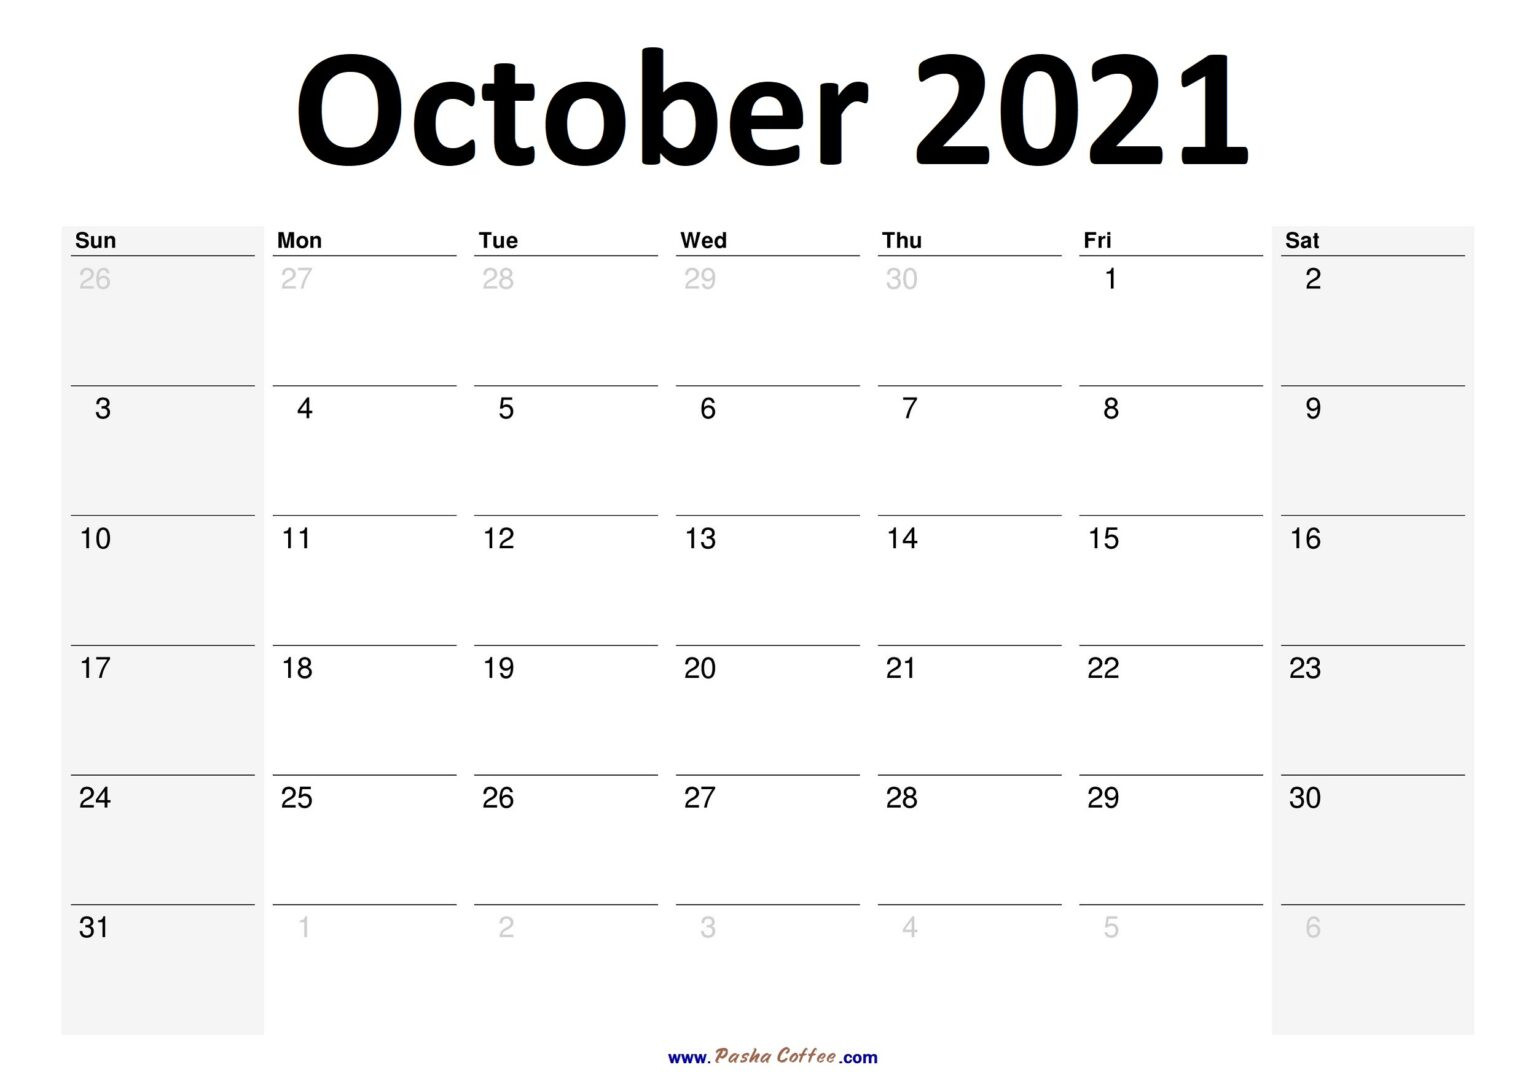 2021 October Calendar Planner Printable Monthly-Printable Monthly Planners For 2021